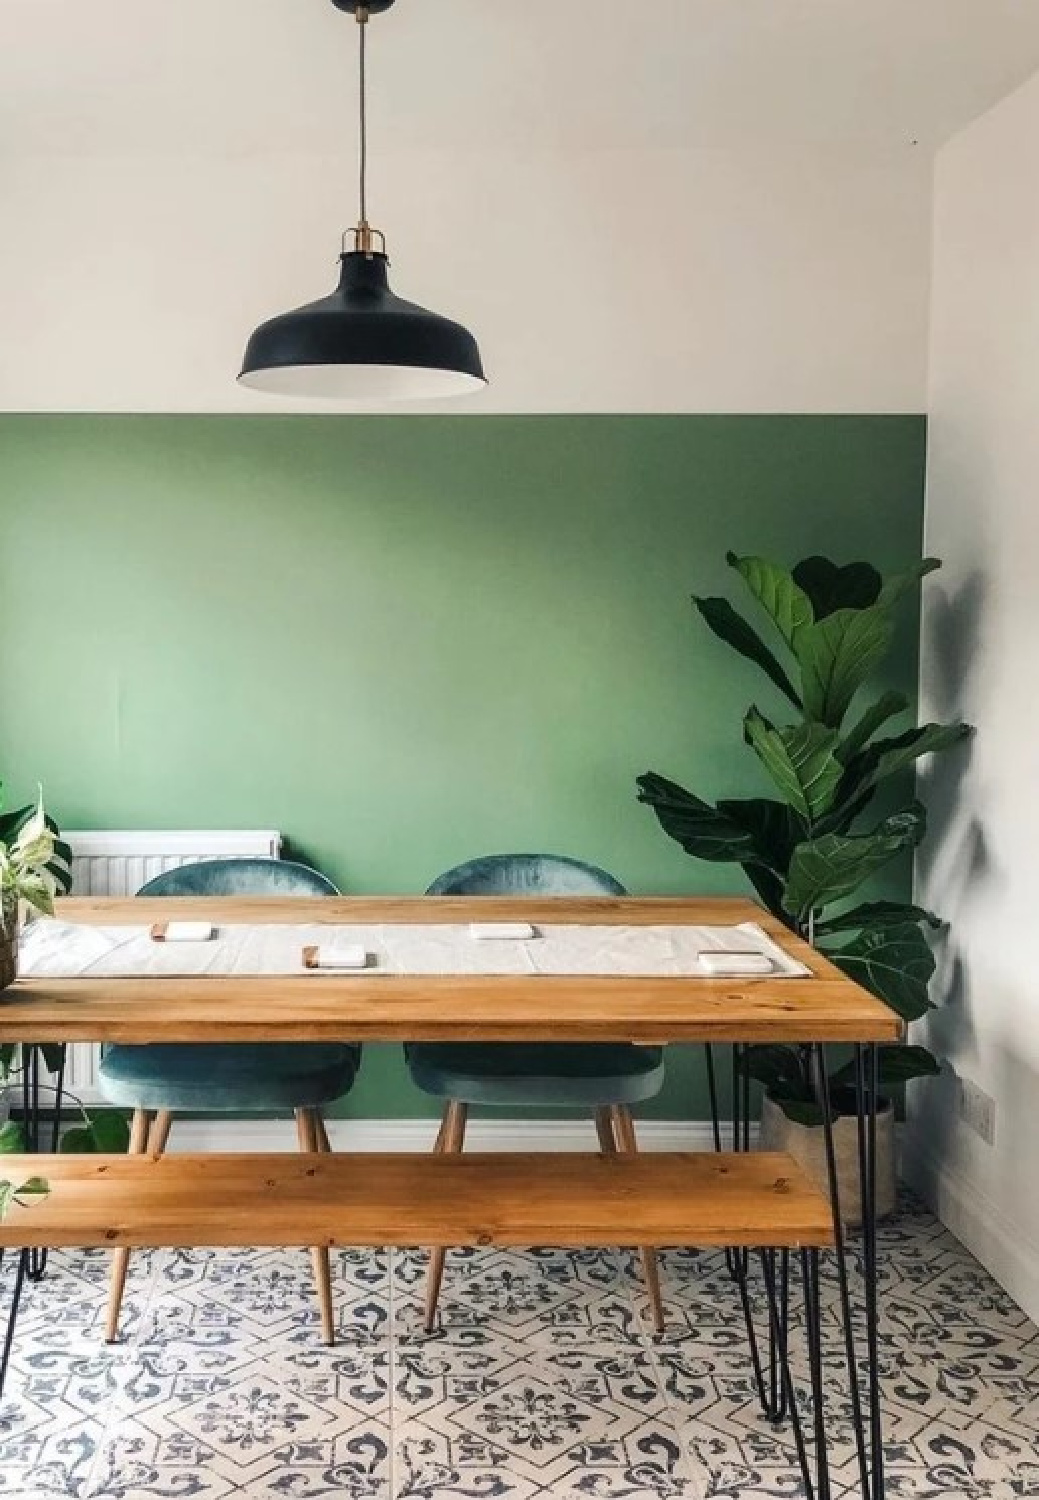 Breakfast Room Green (F&B) painted wall in a dining area by @jessicasimmons. #farrowandballbreakfastroomgreen #greenpaintcolors